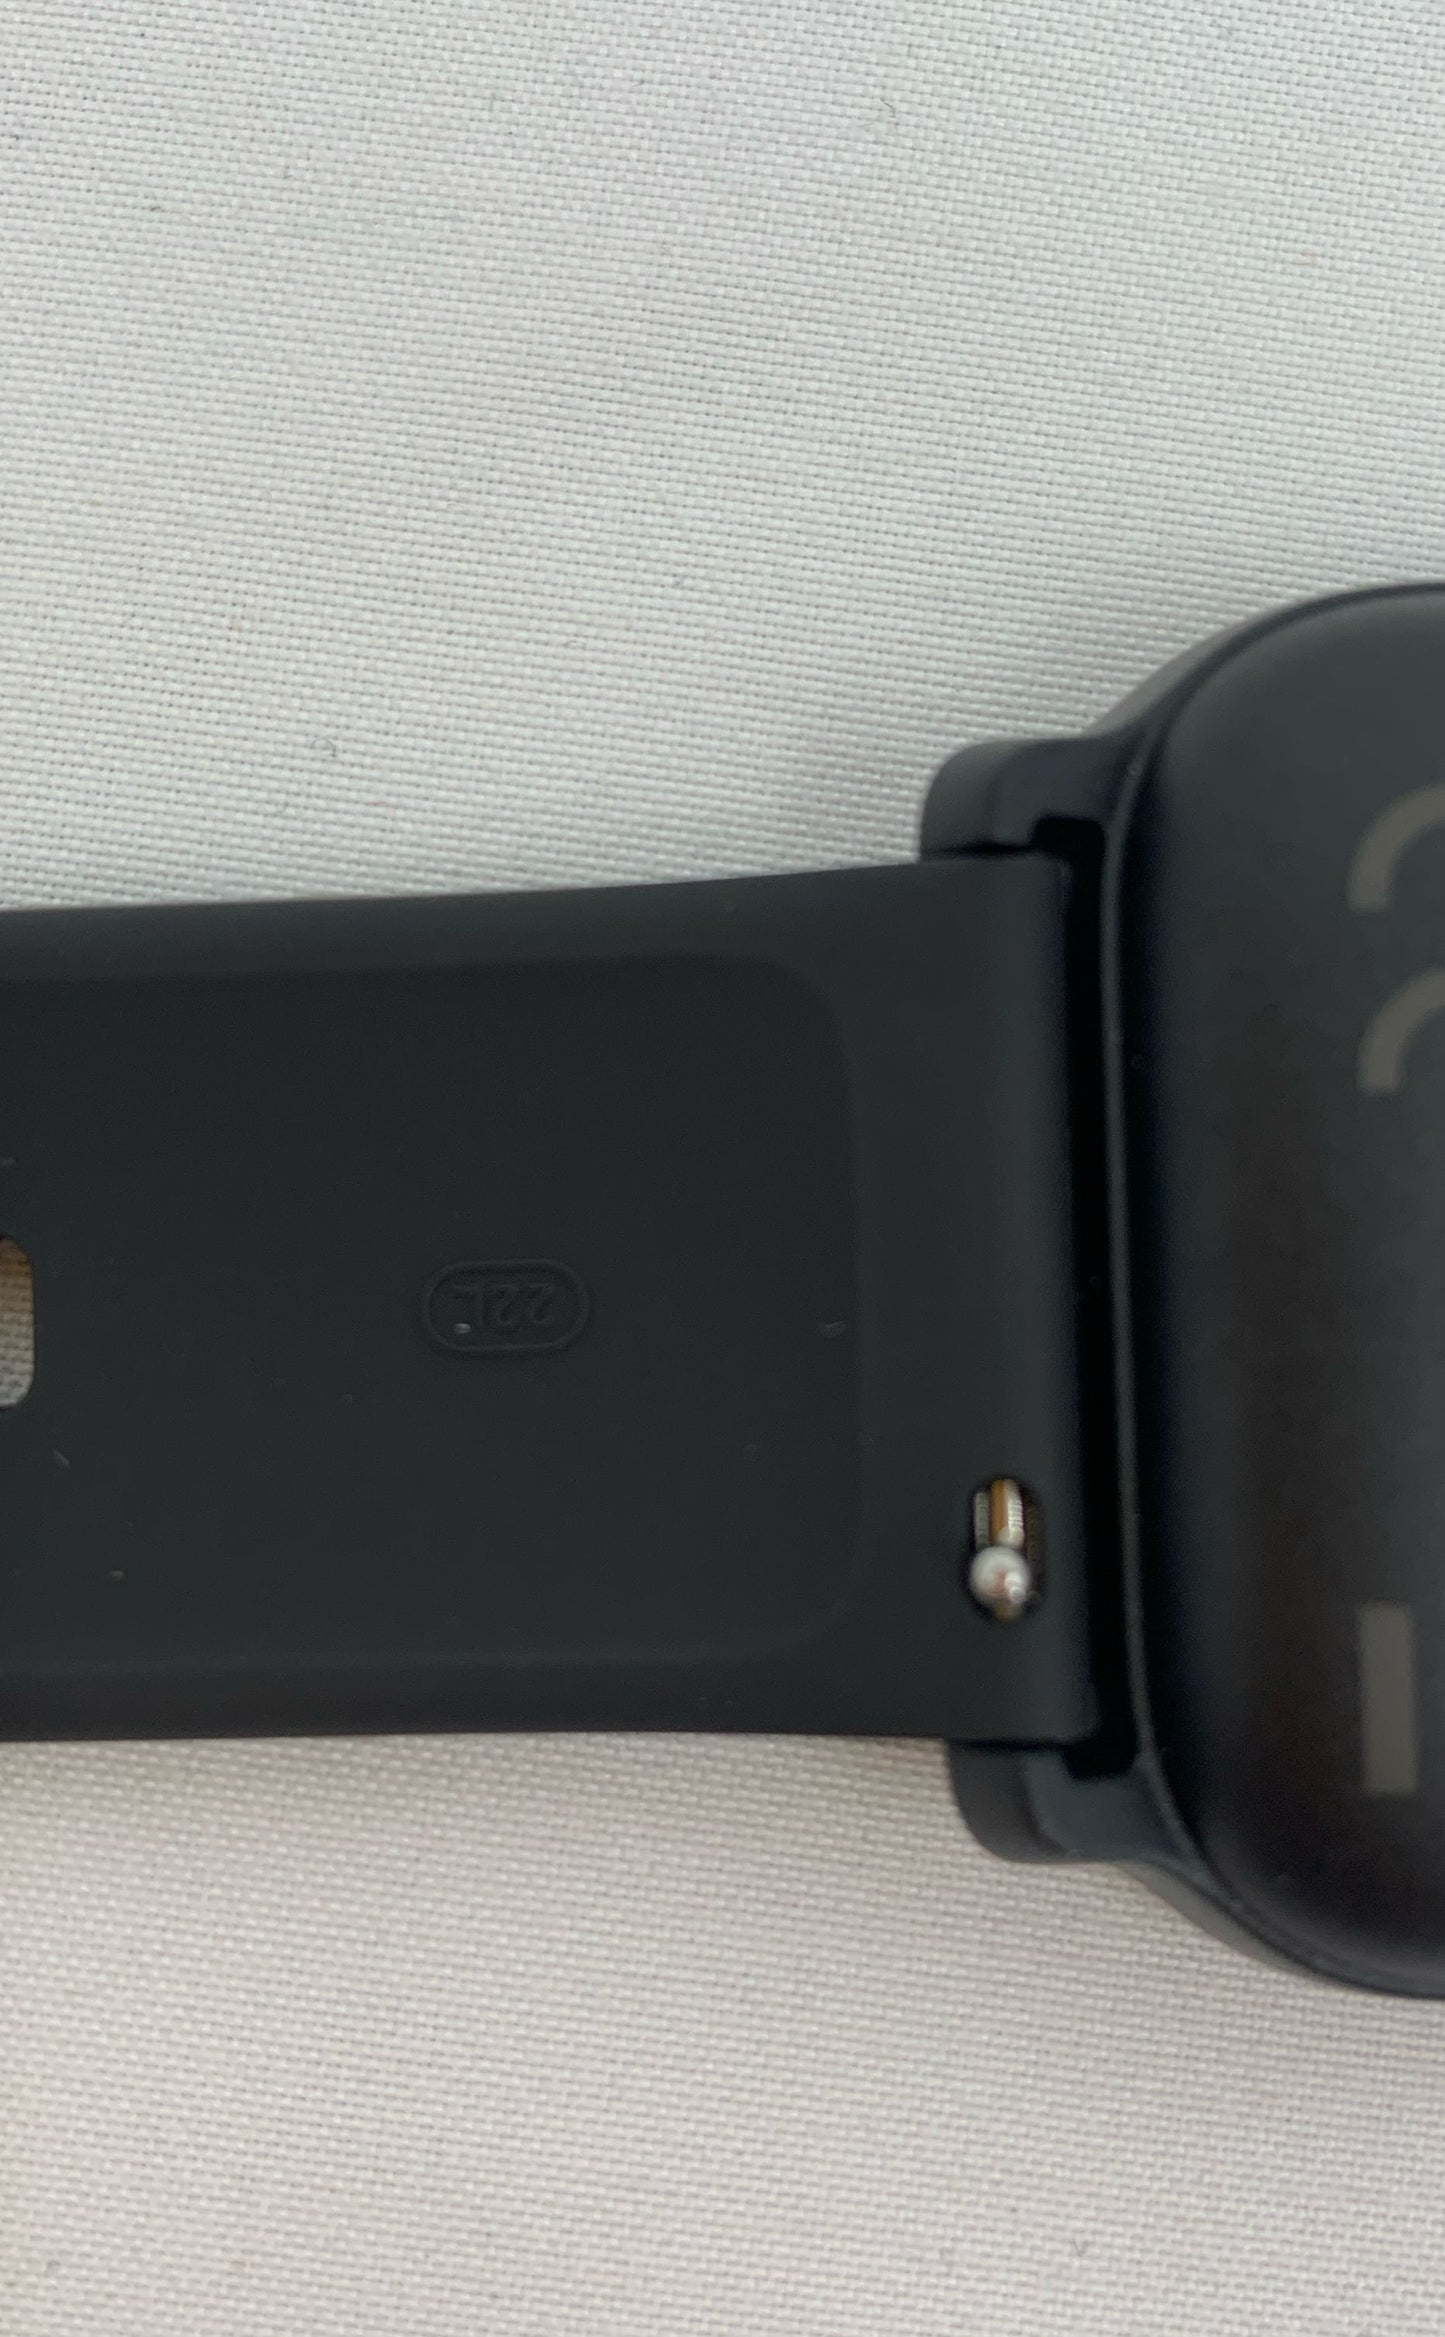 VeryFit IDW13 Waterproof Touch Screen Digital Smart Watch With Alexa Built-In